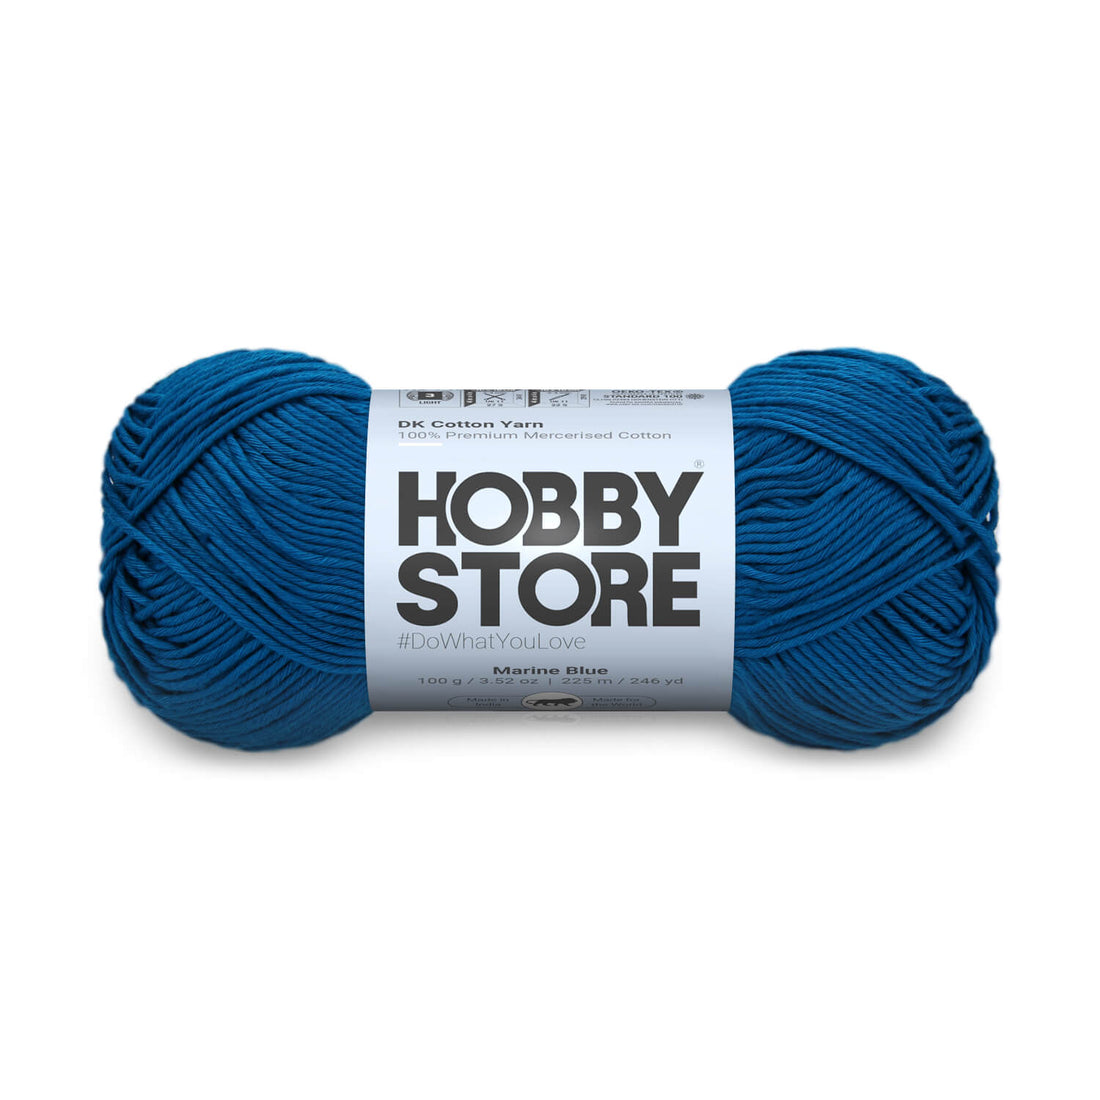 DK Mercerised Cotton Yarn by Hobby Store - Marine Blue - 329